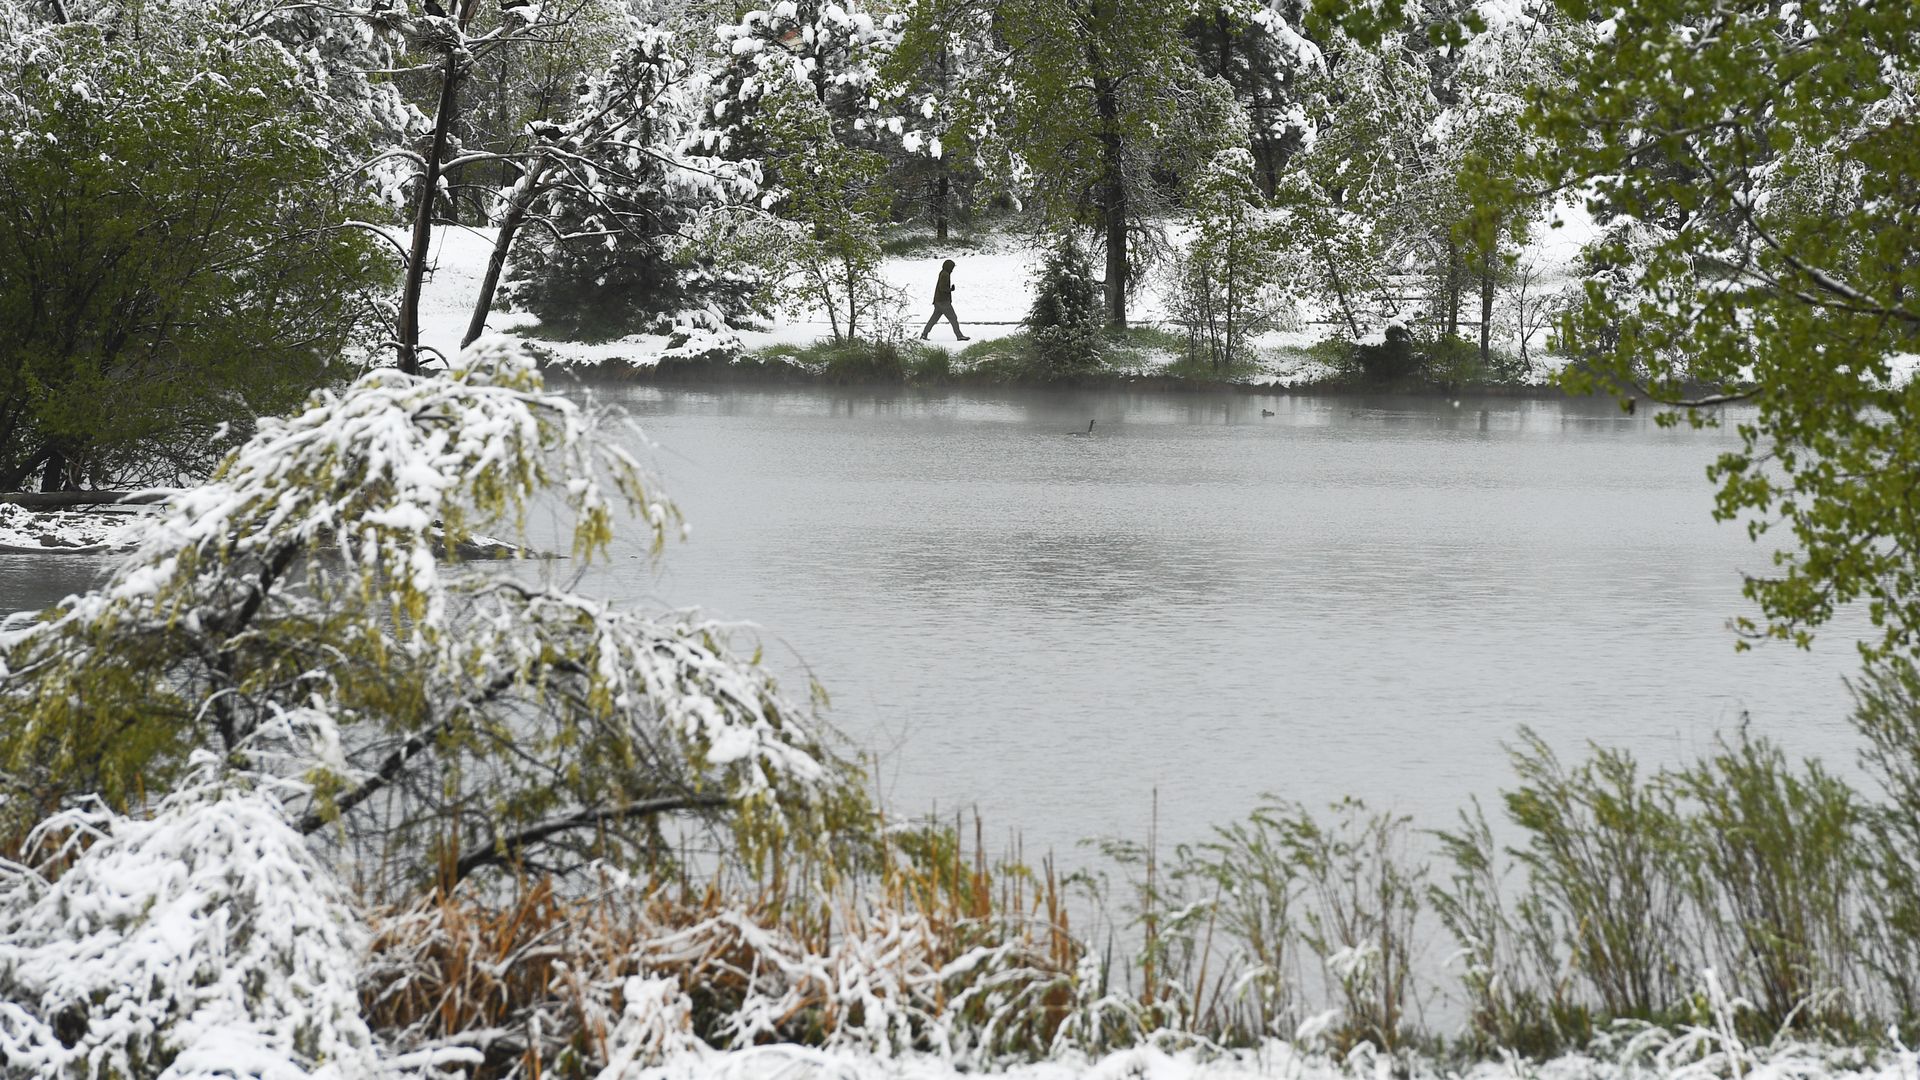 Snow on trees around a lake